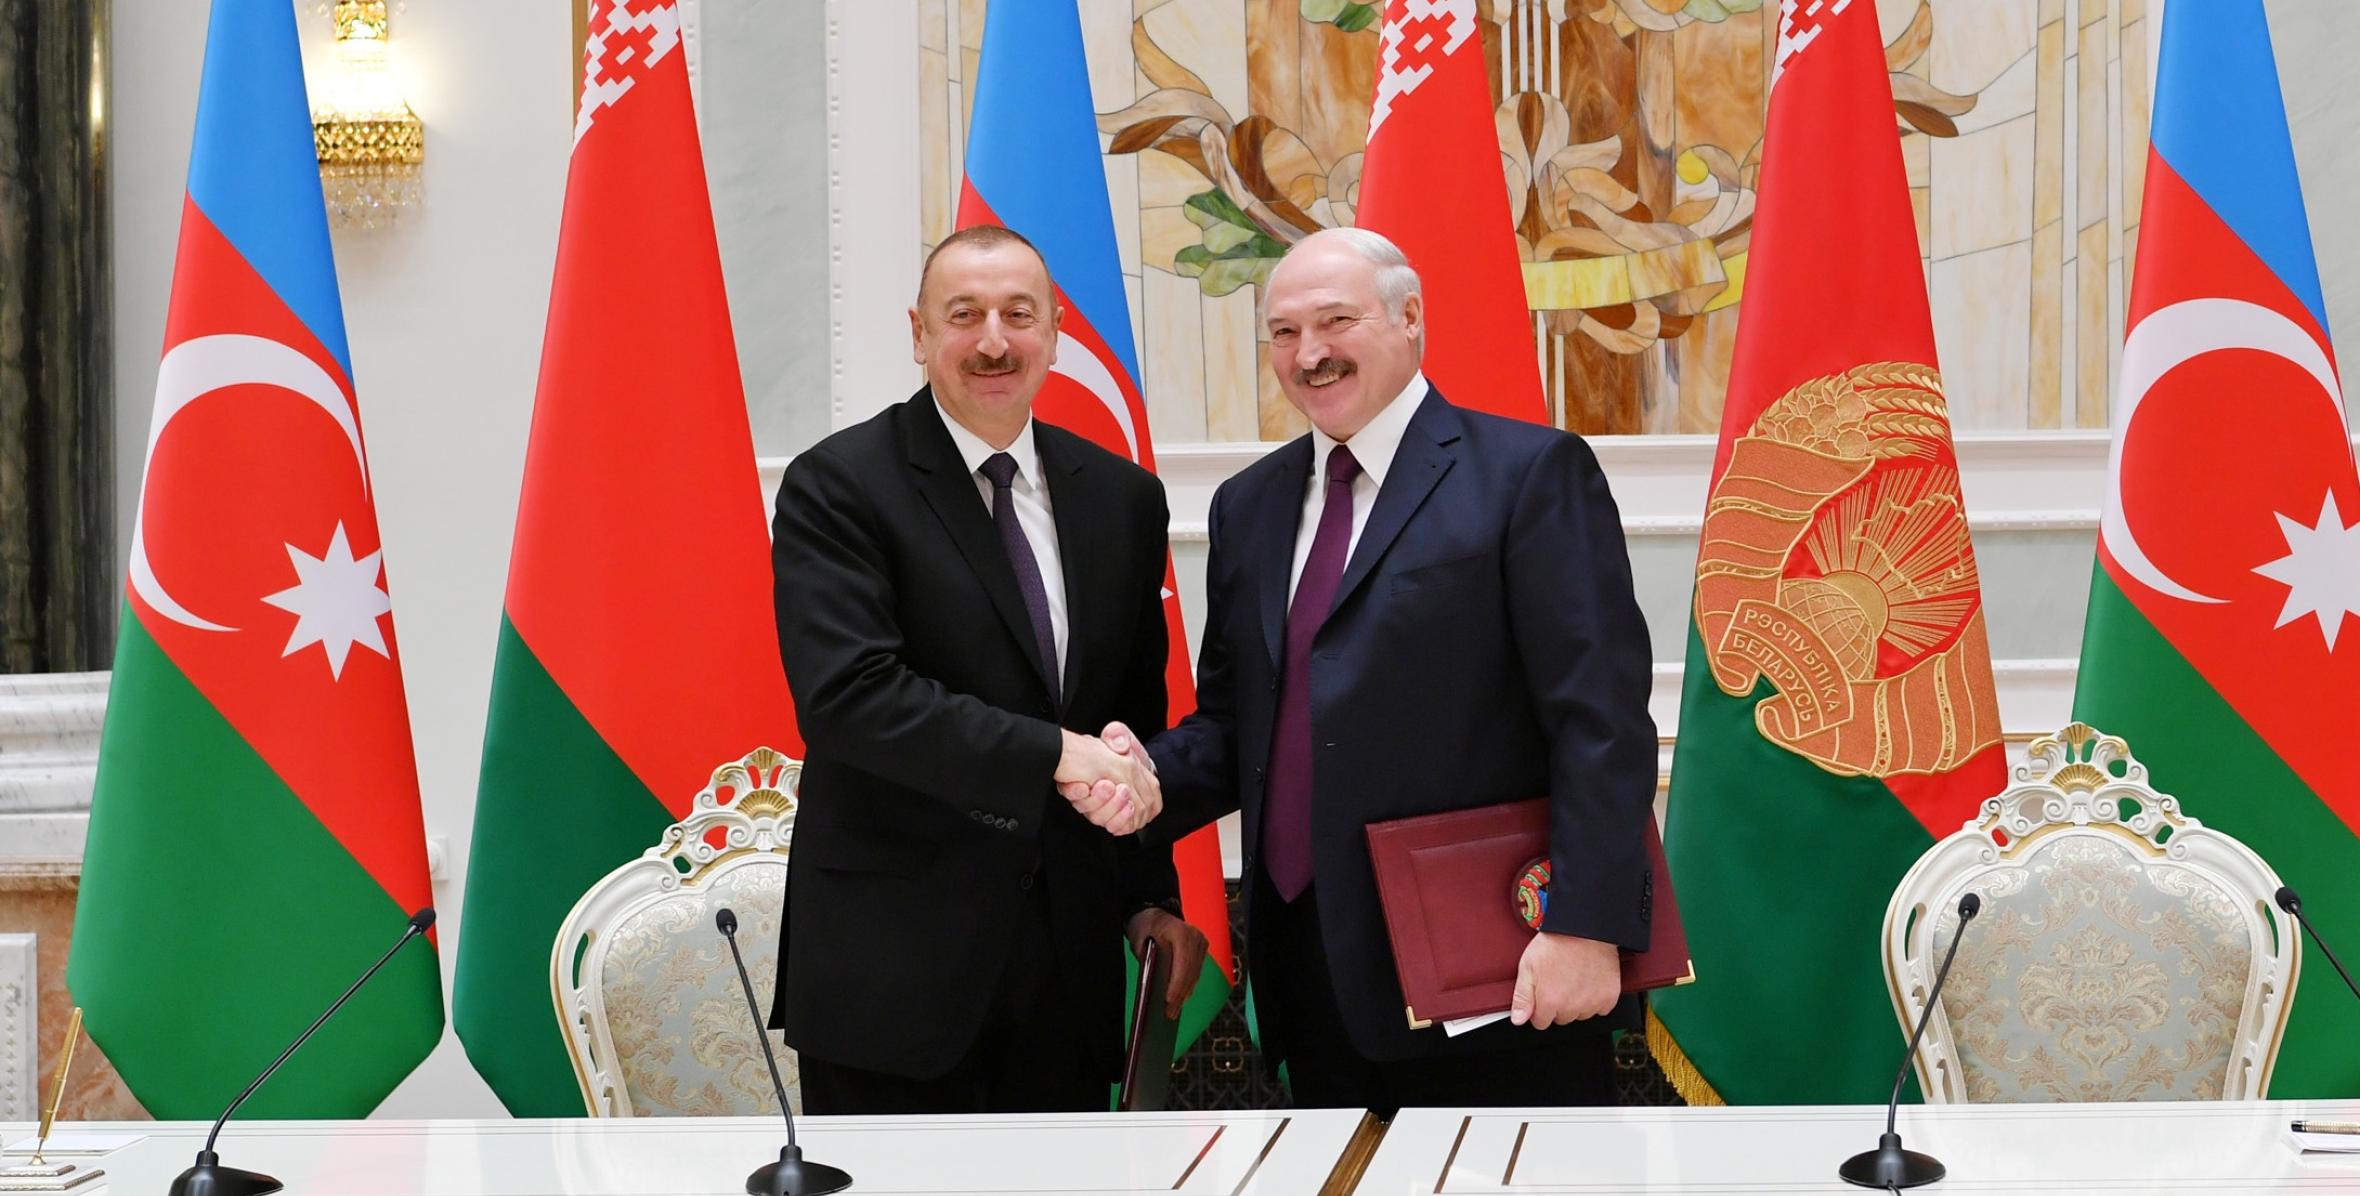 Official visit of Ilham Aliyev to Belarus